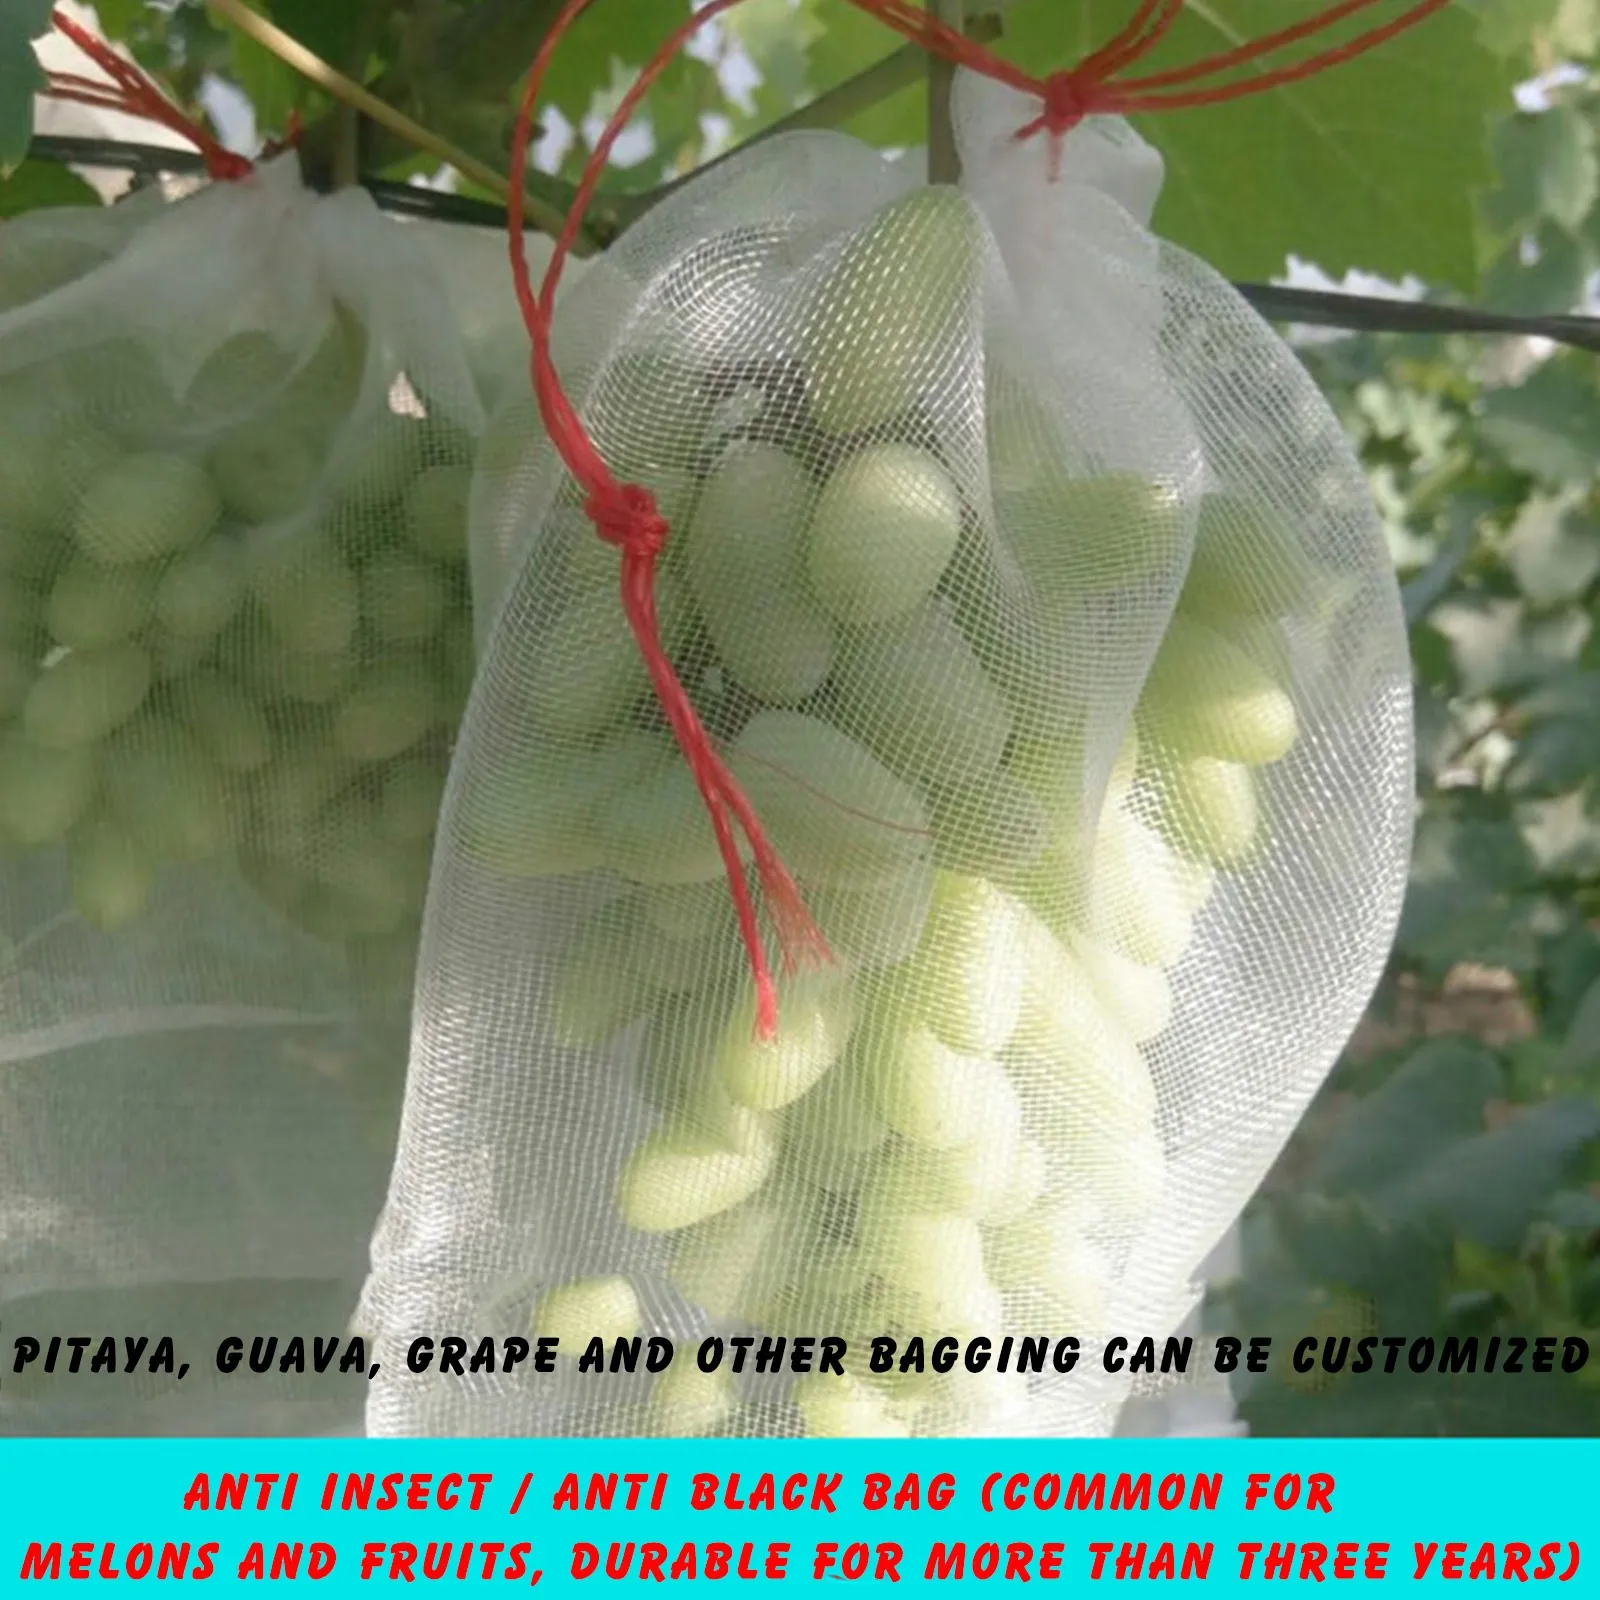 100pc Nylon Fruit Protection Bags Plant Vegetable Reusable Mesh Netting Bag Grapes Apple Pest Control Anti-Bird Garden Supplies